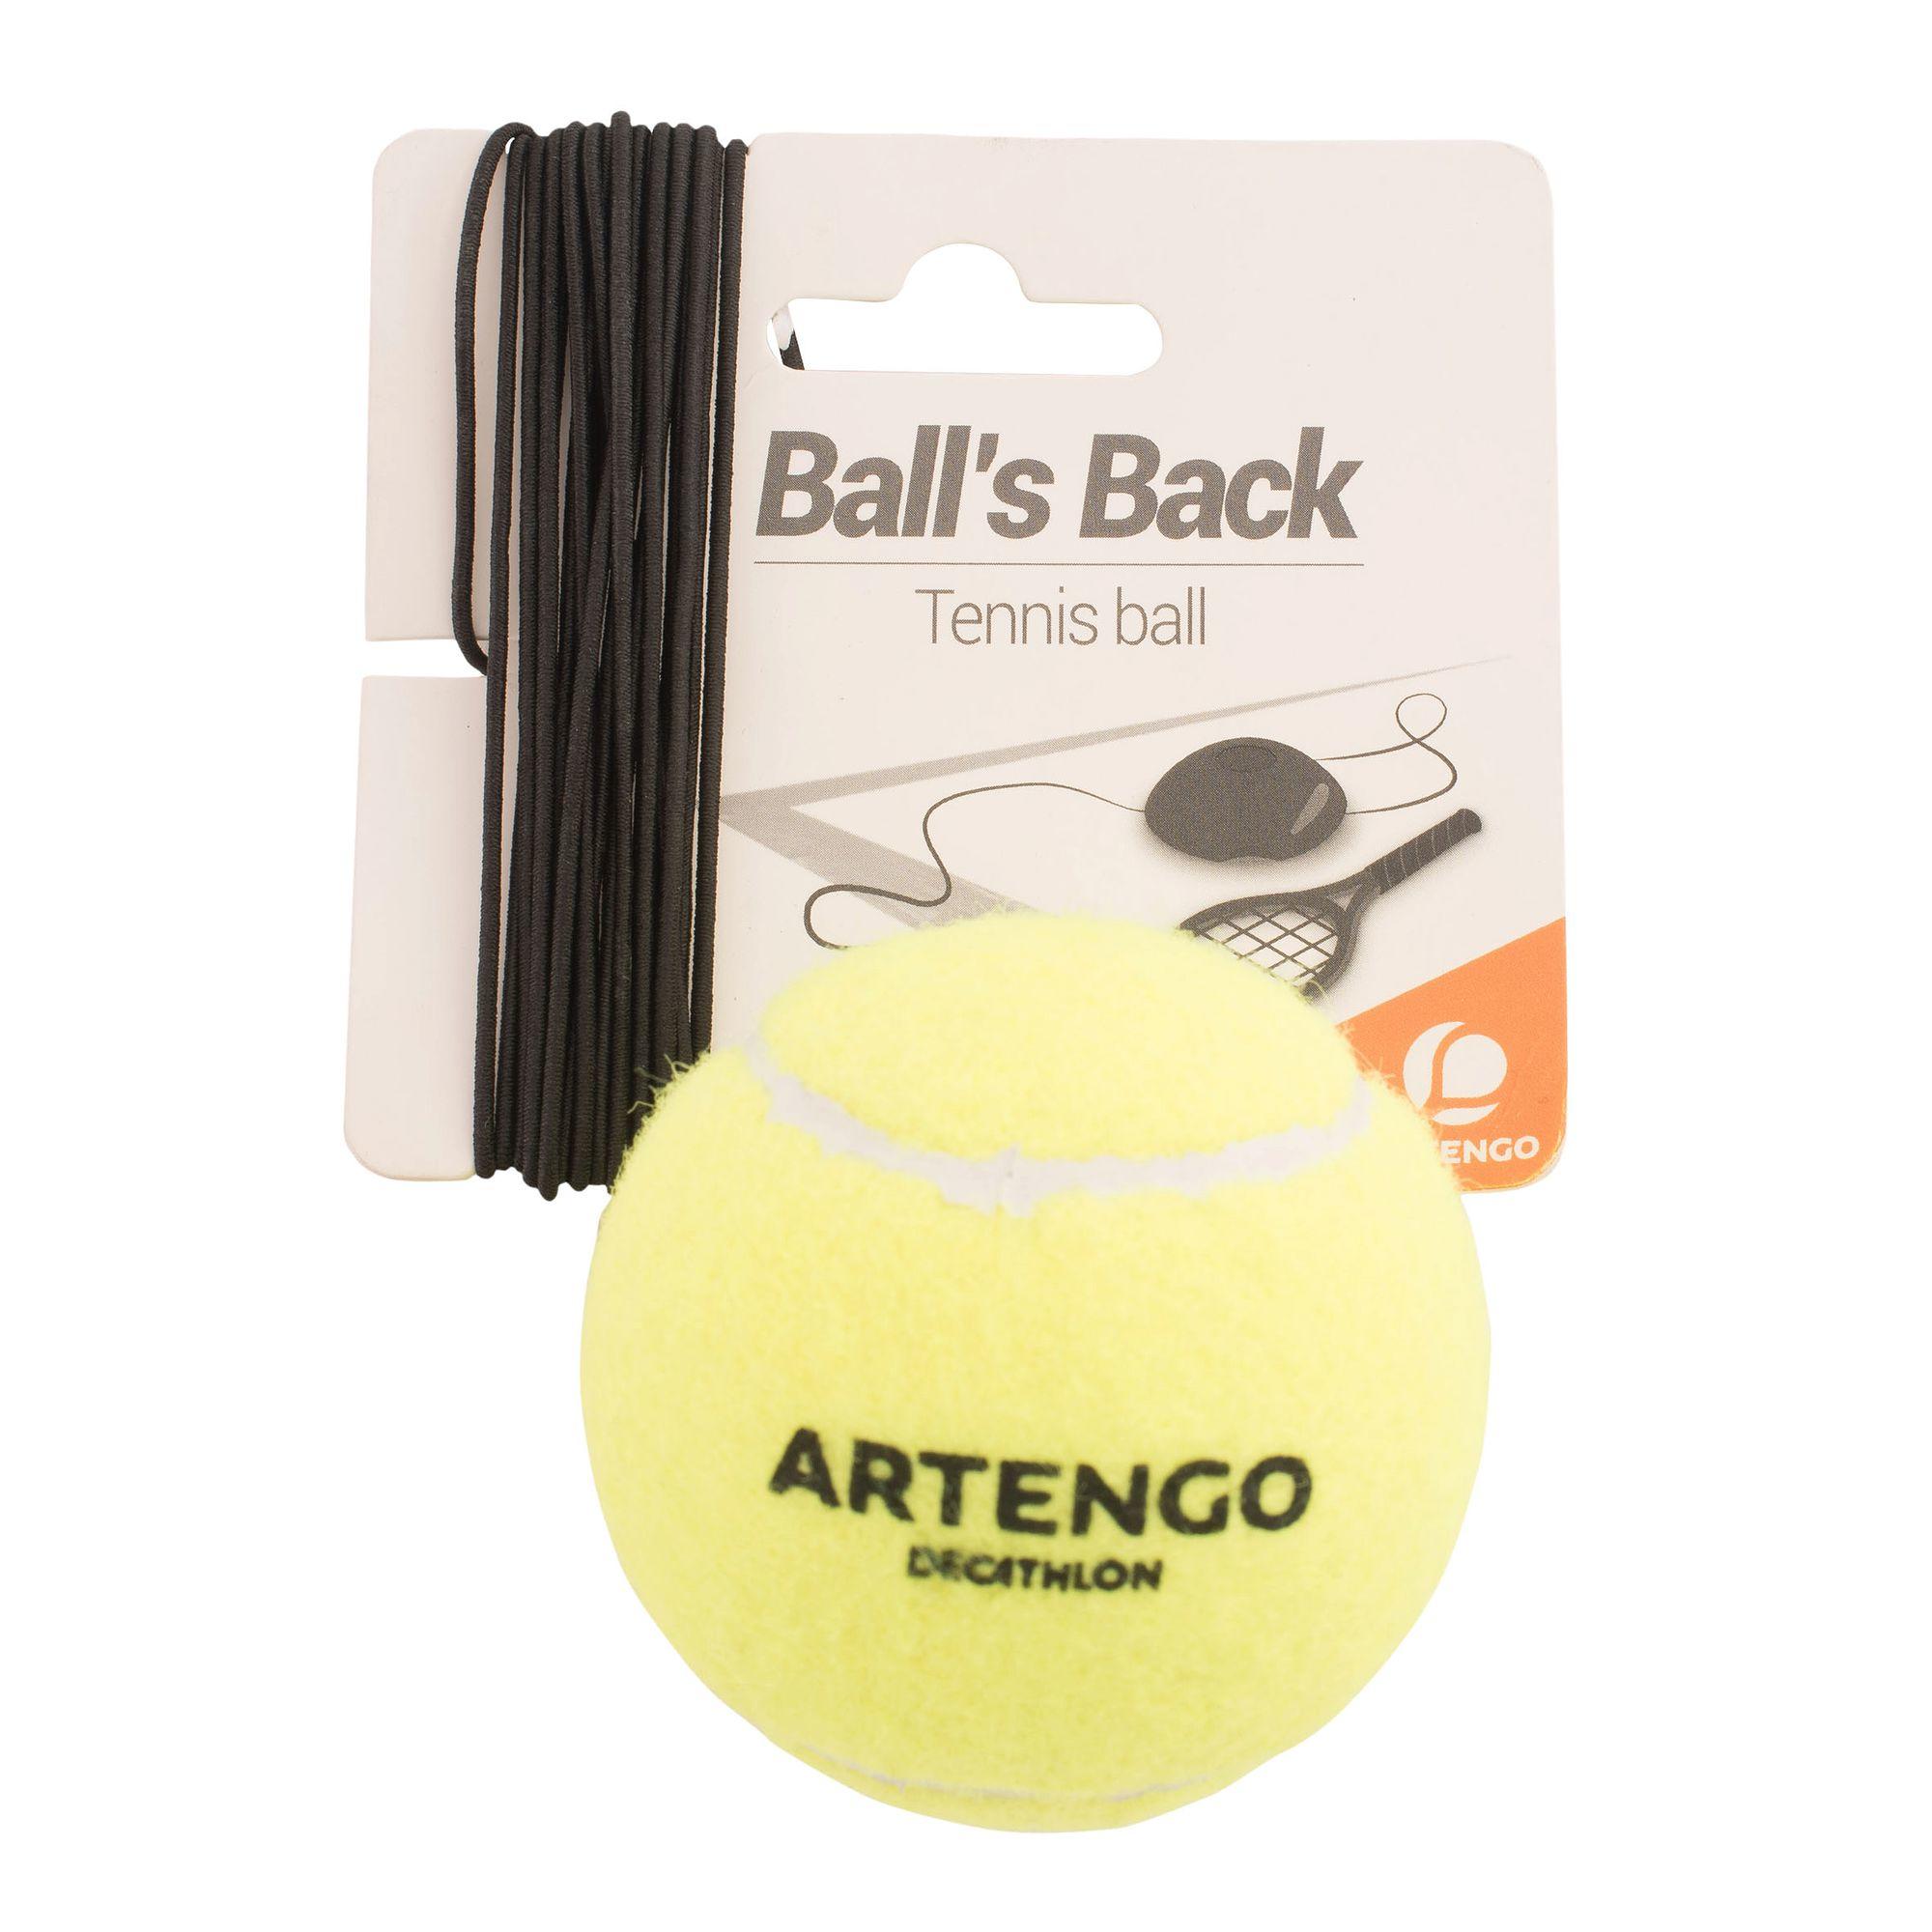 artengo tennis trainer